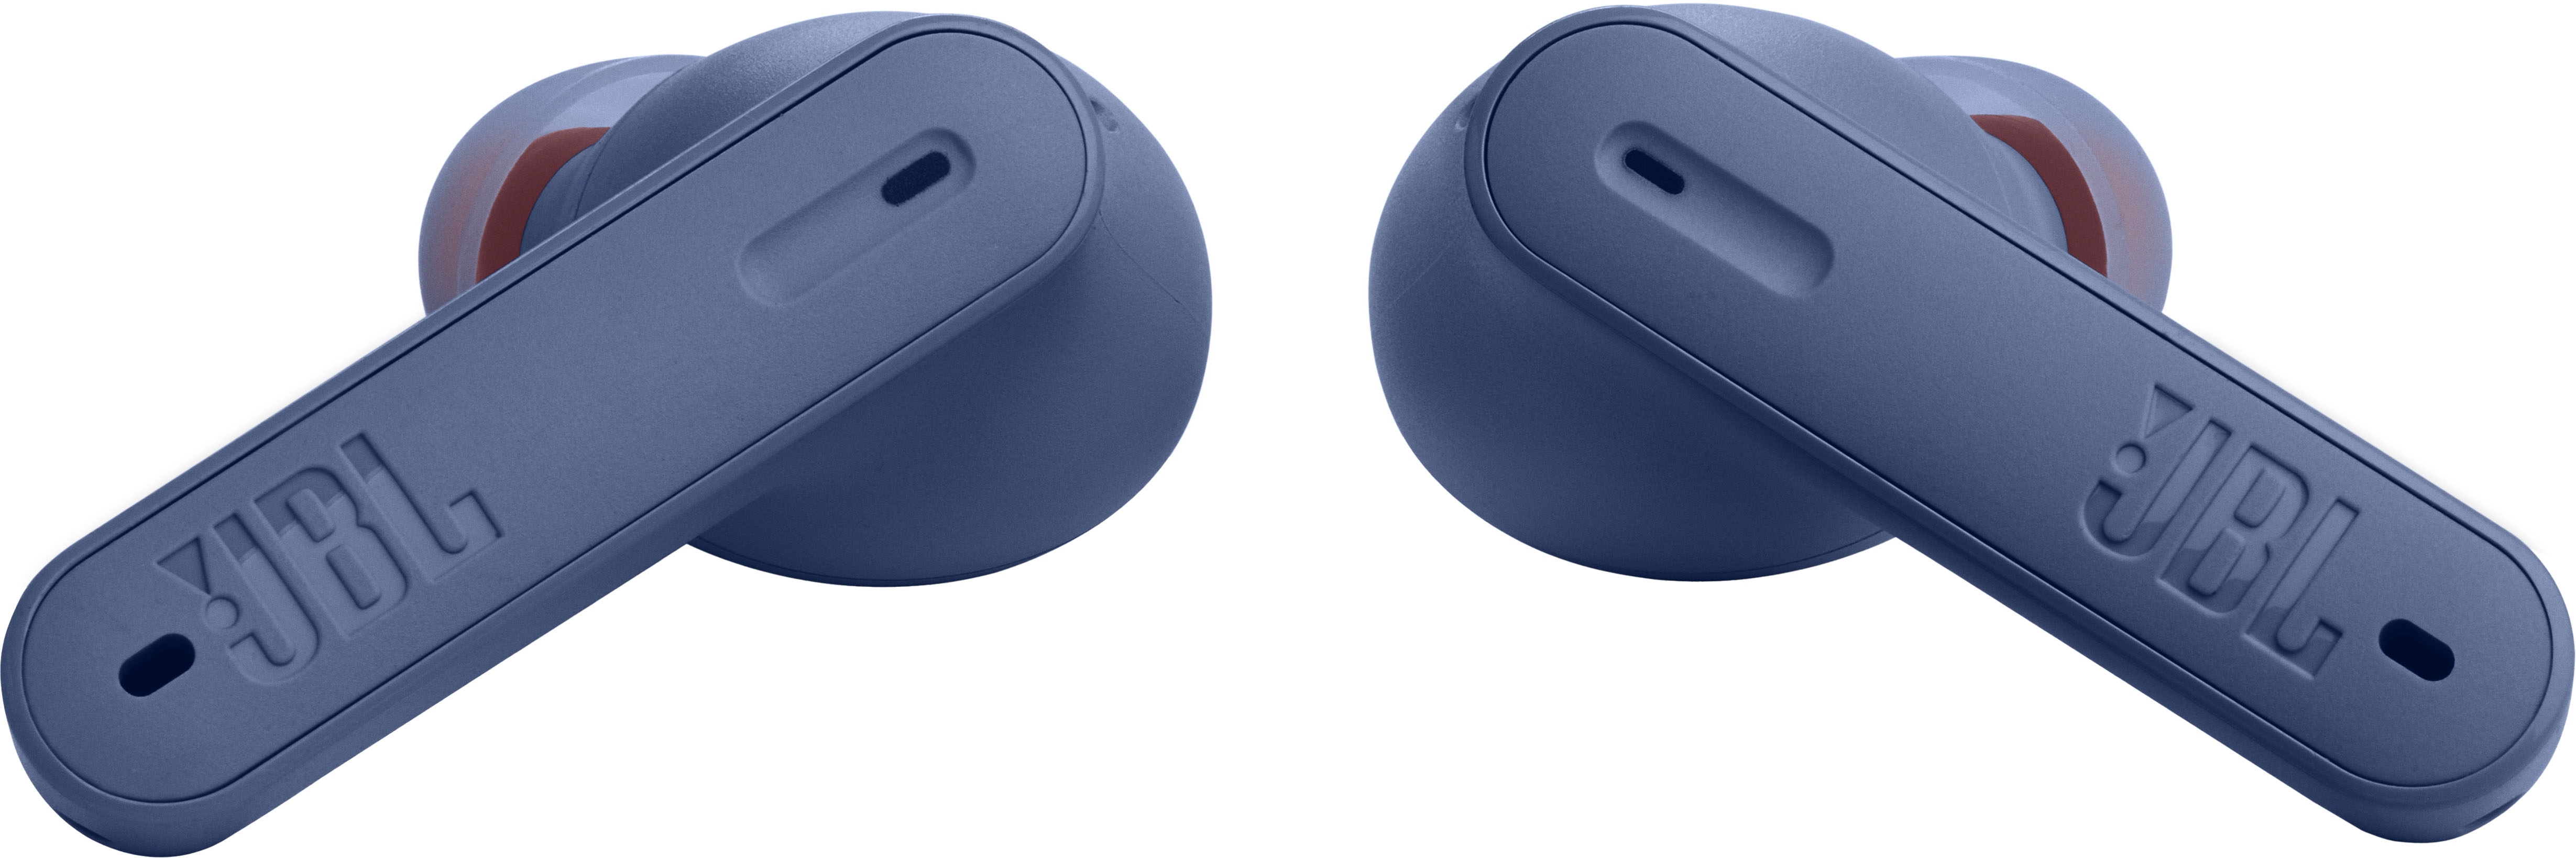 Left View: Sudio - The T2 True Wireless Noise Cancelling In-Ear Earbuds - Black